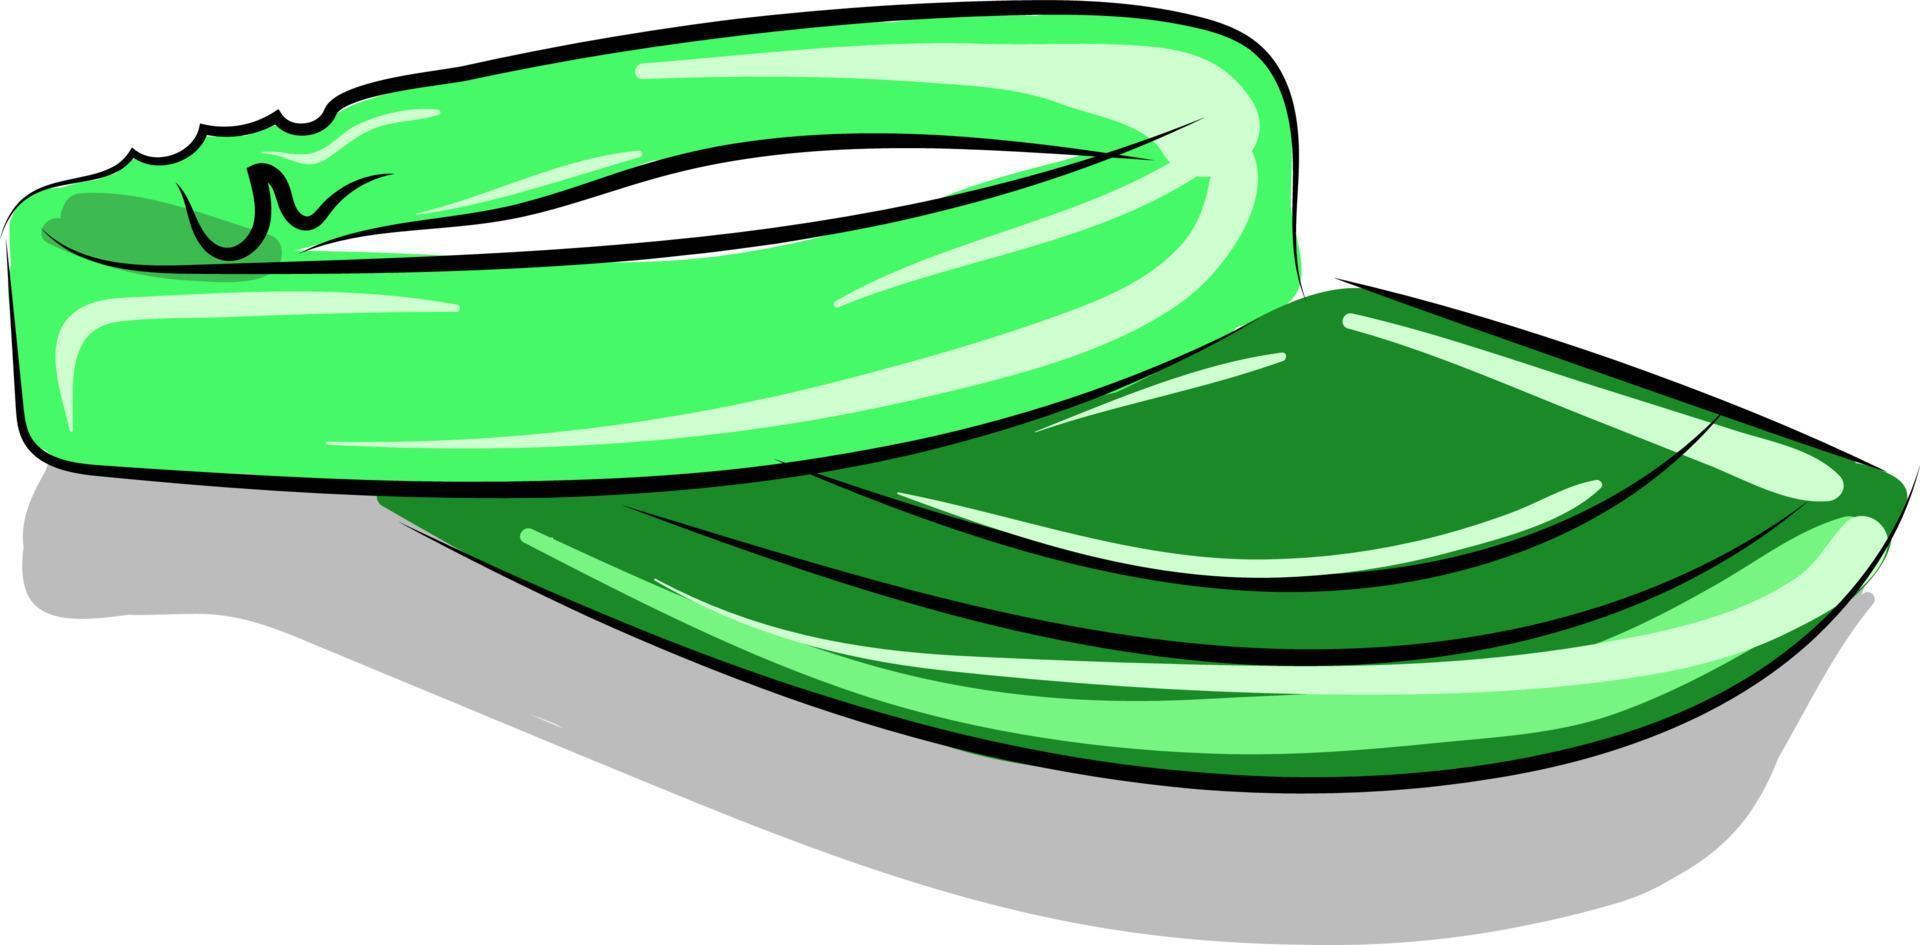 grön keps, illustration, vektor på vit bakgrund.